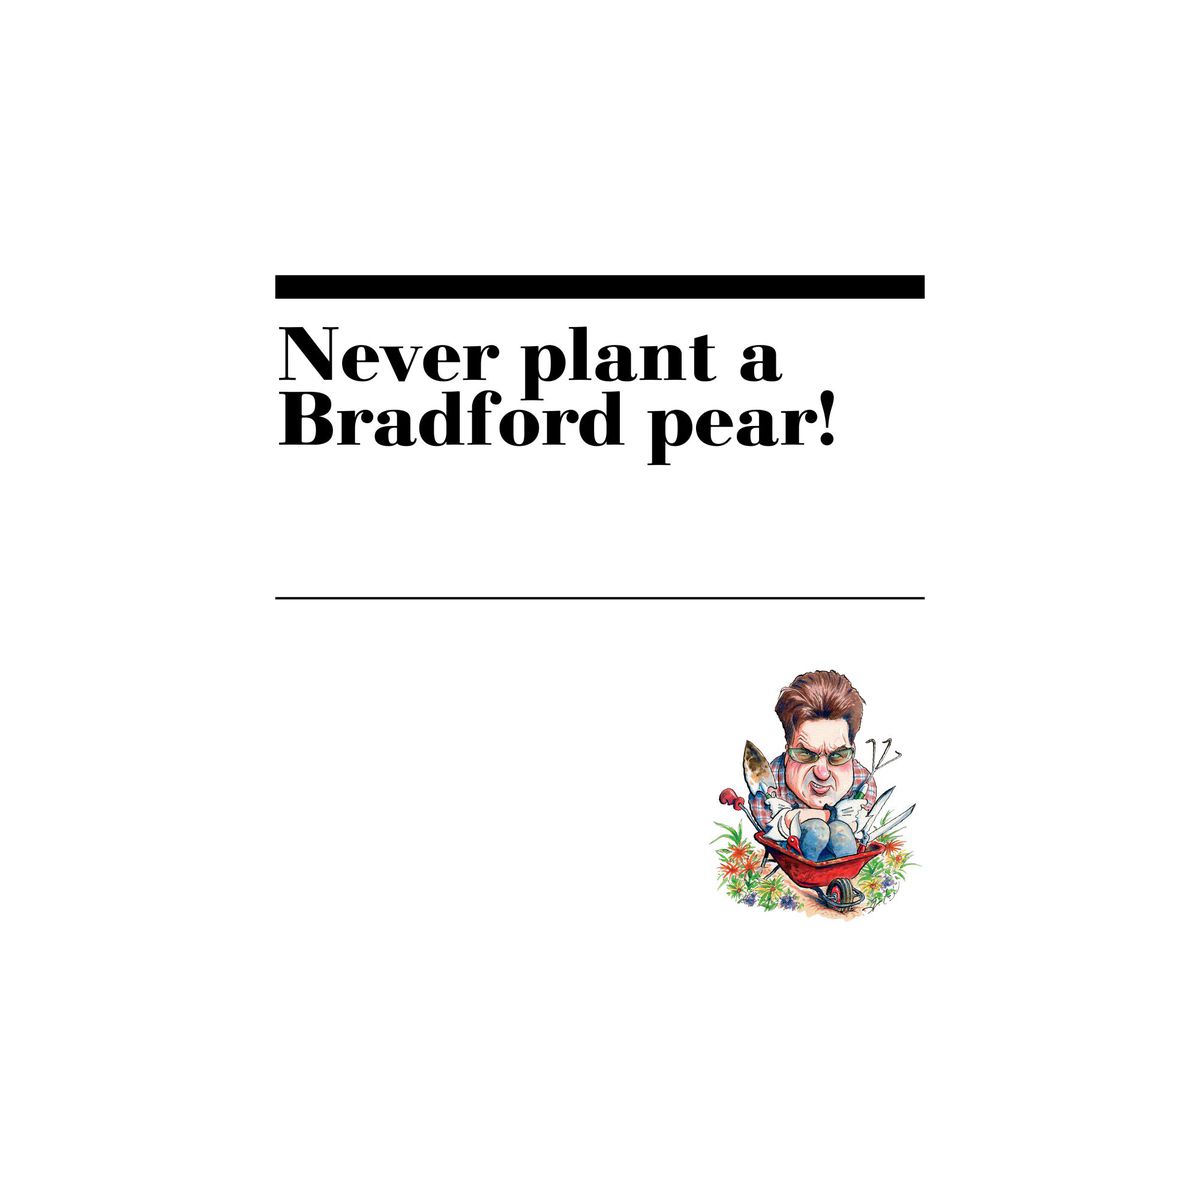 12. Never plant a Bradford pear!